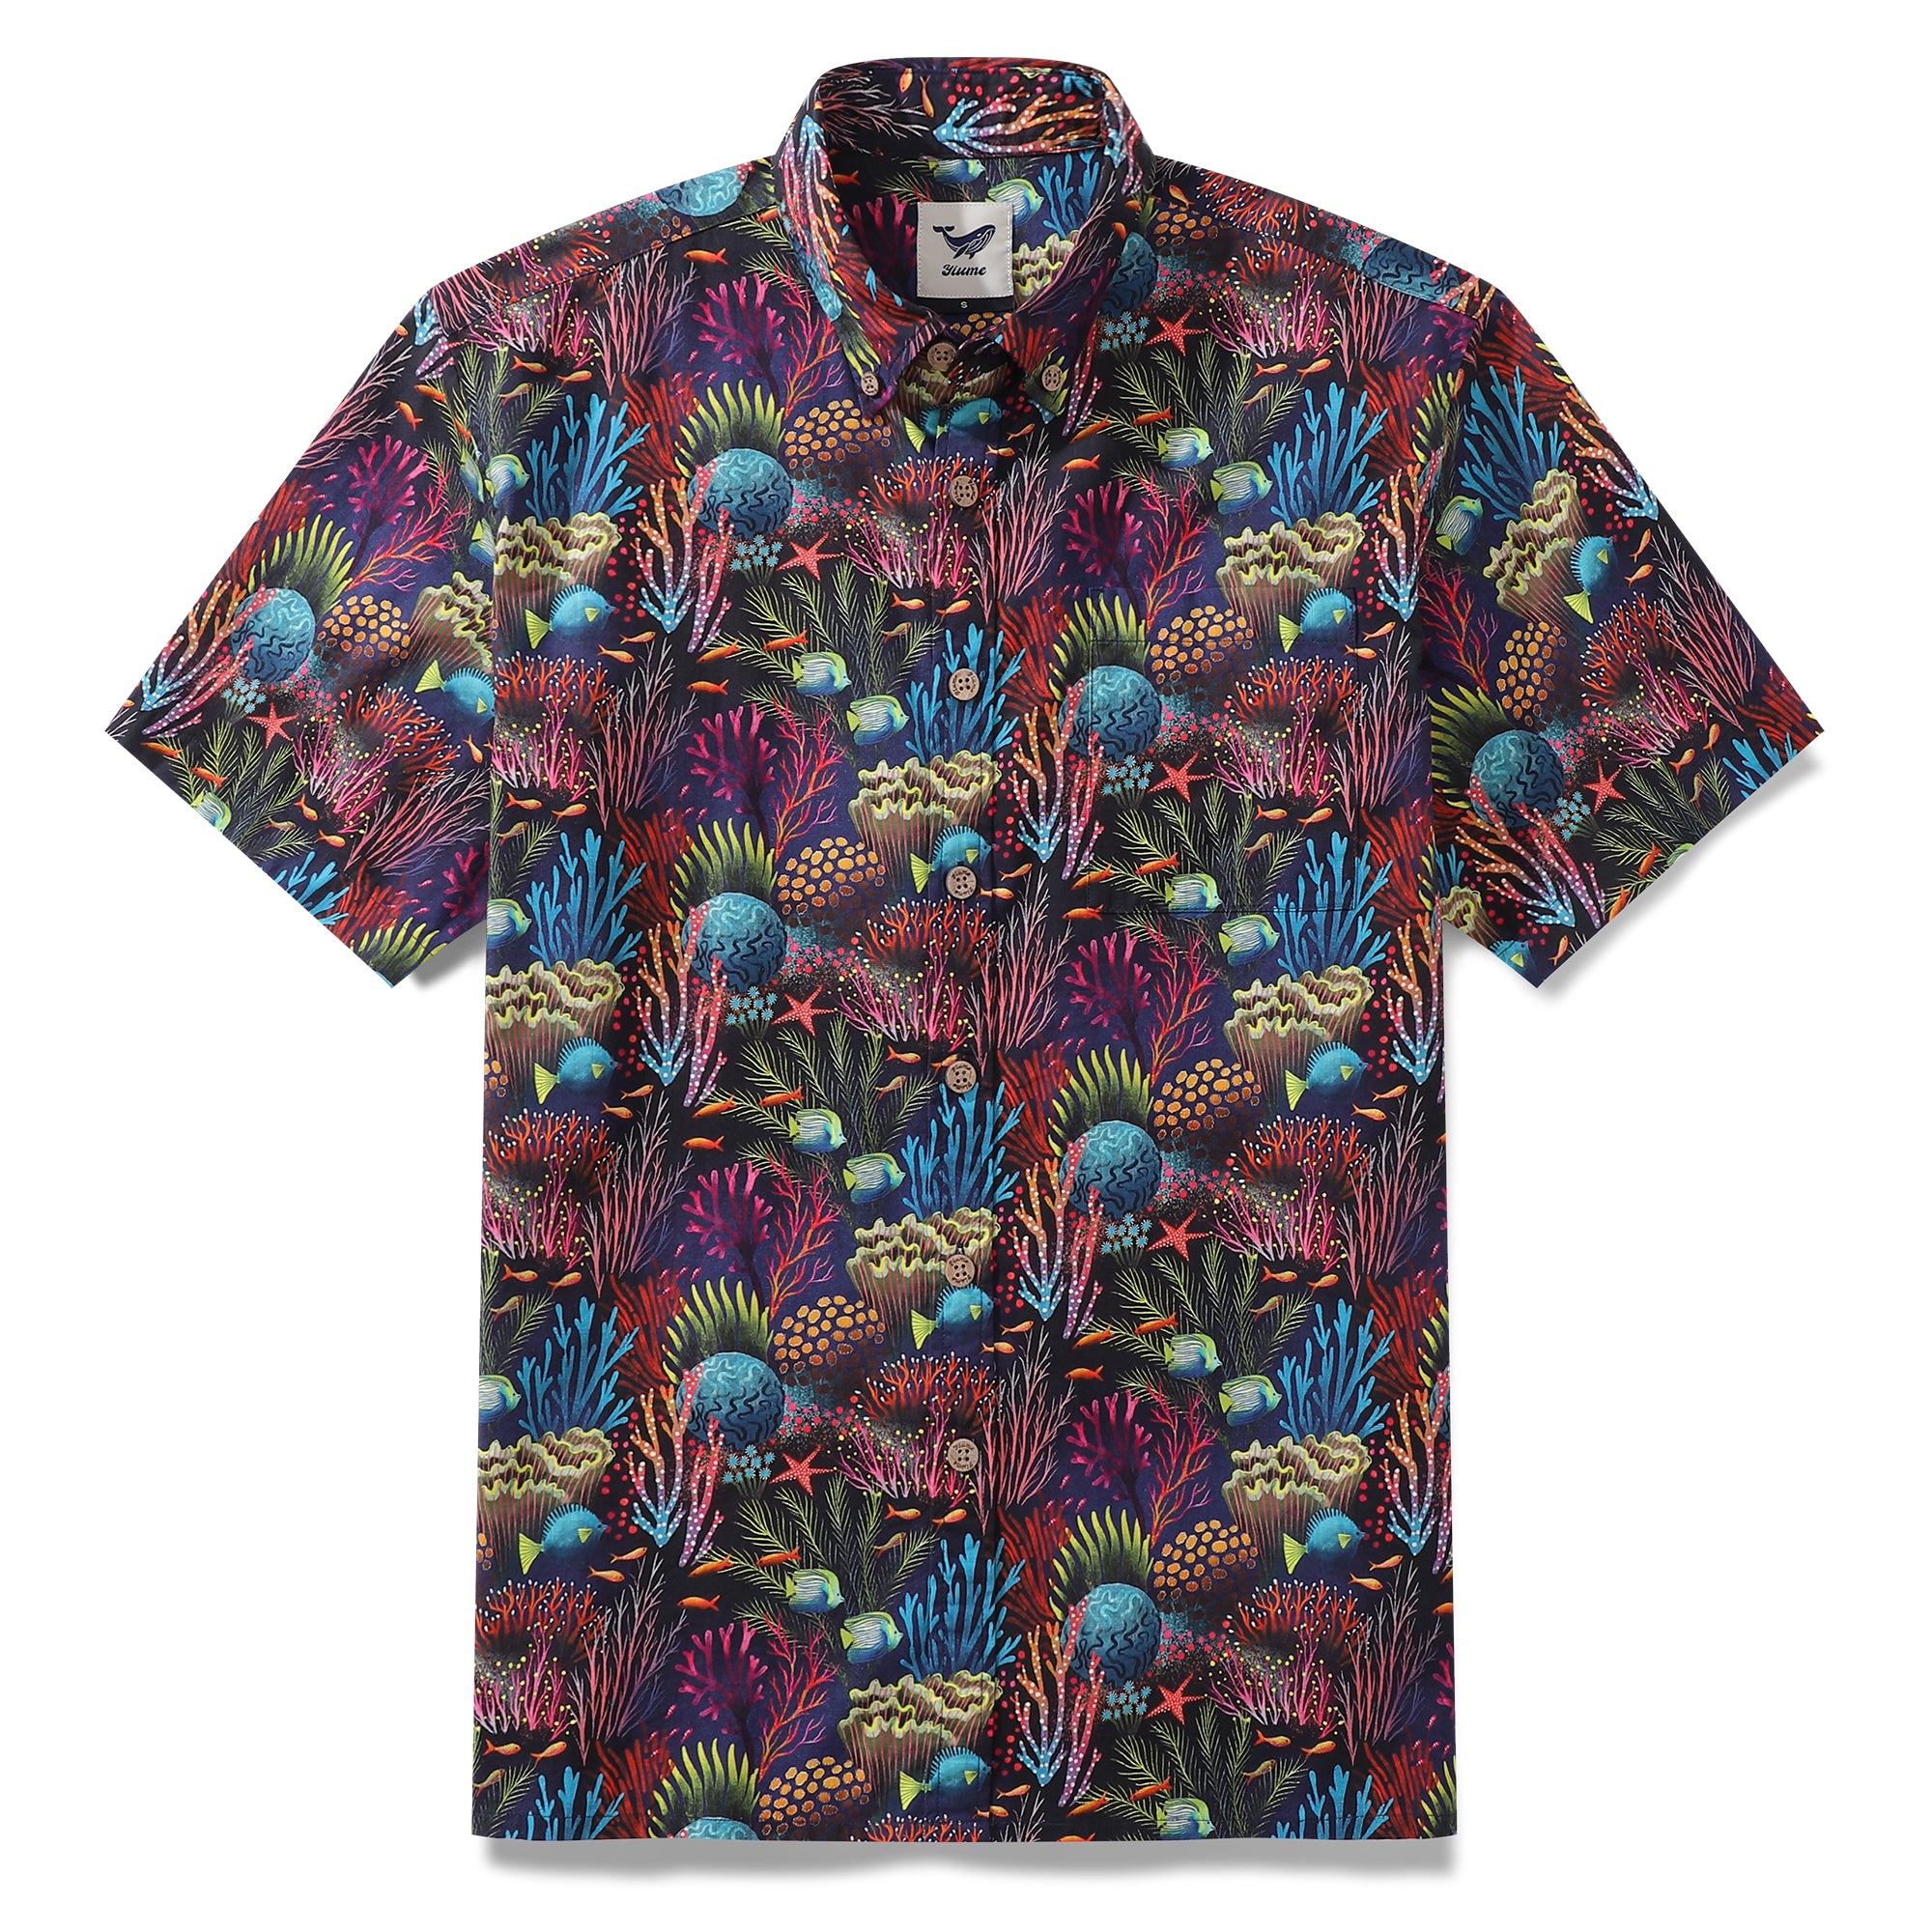 Mens Hawaiian Shirt Magical World Coral Reef Short Sleeve Cotton Beach Shirts For Men